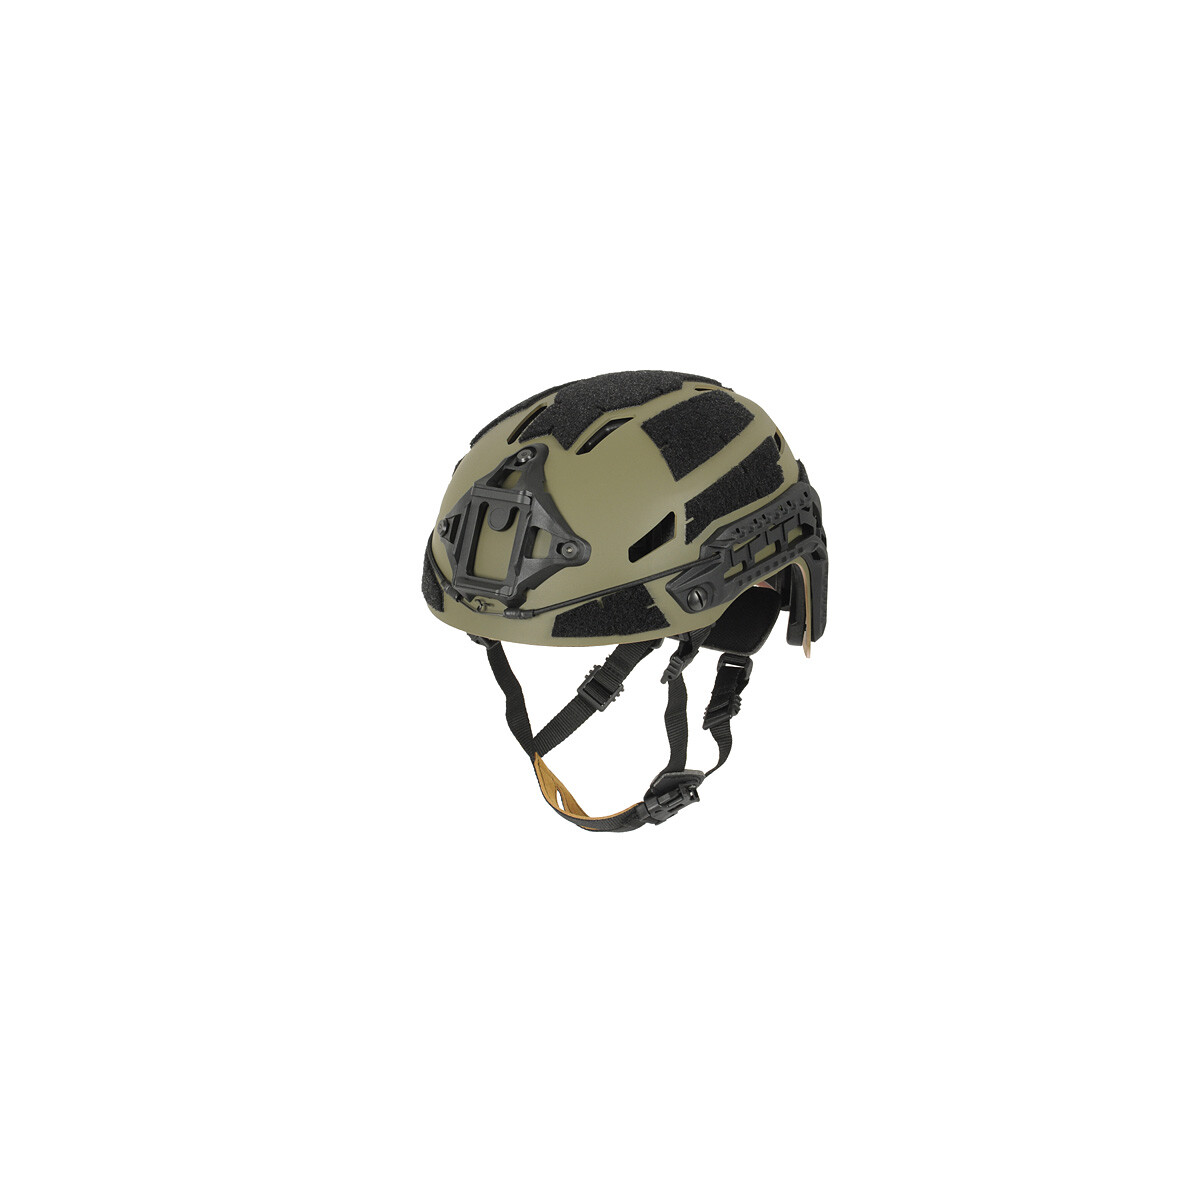 Next-generation Spec-Ops bump helmet - Ranger Green [FMA]